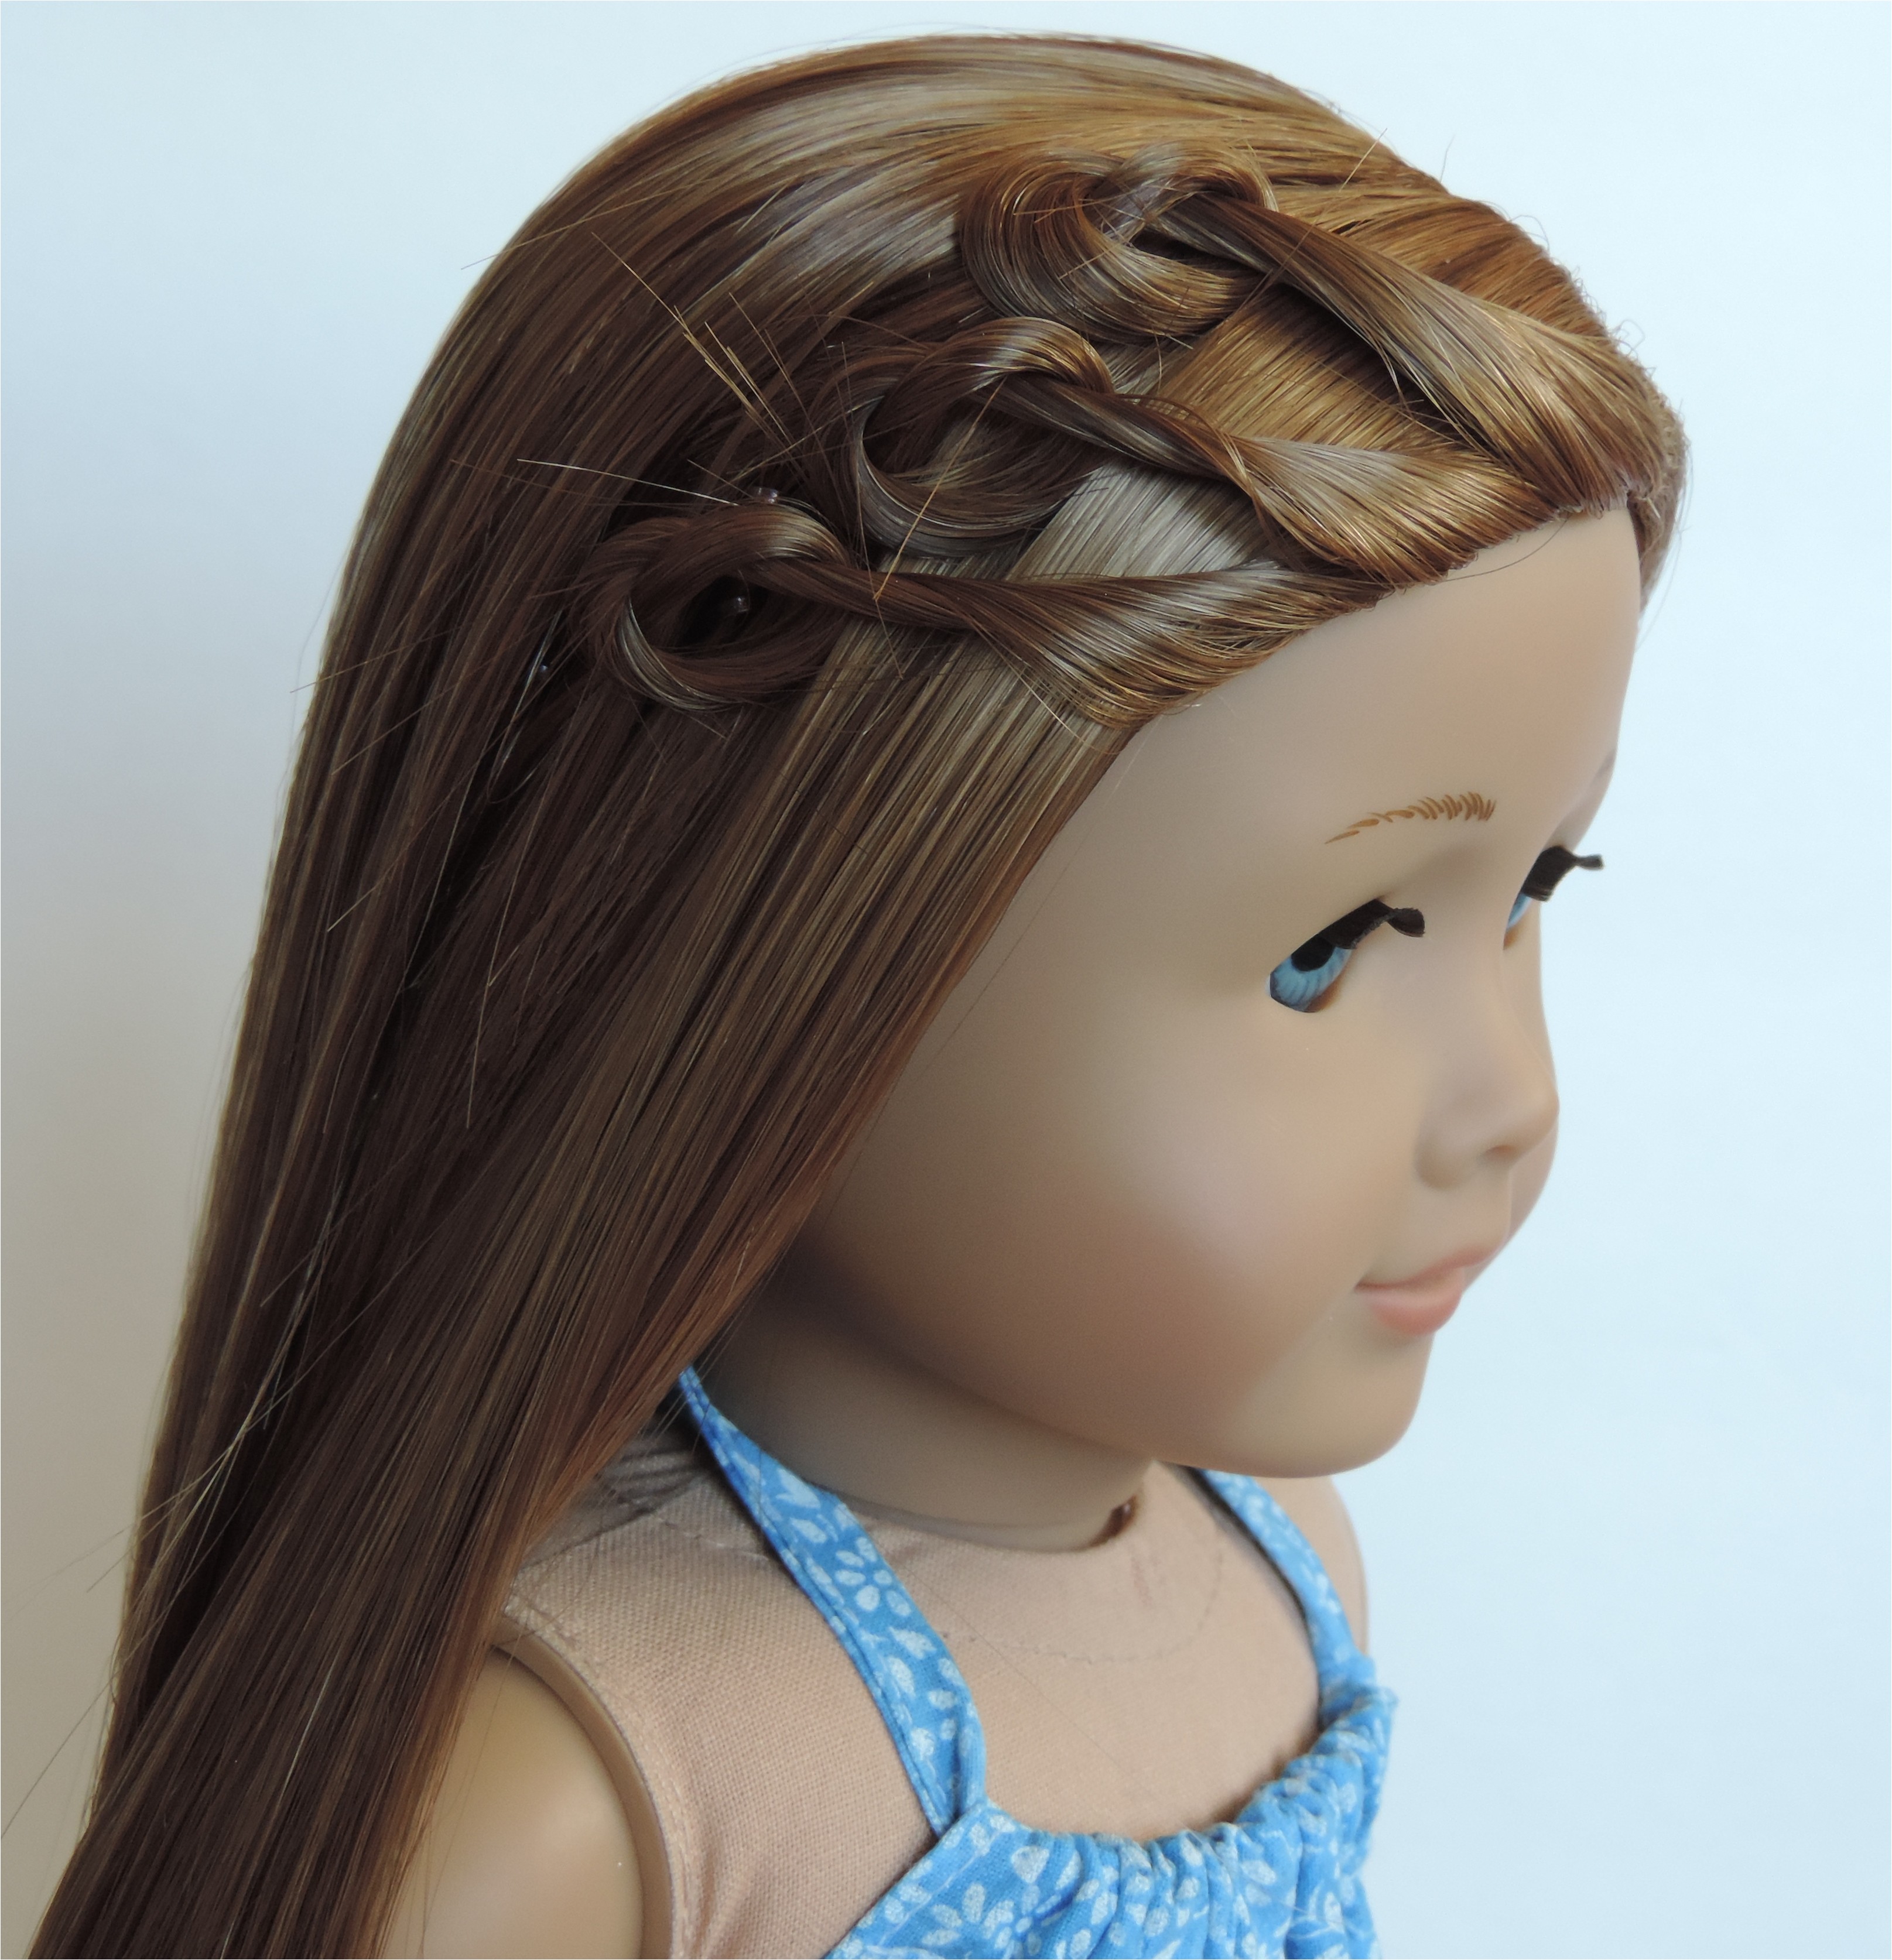 Cute American Girl Doll Hairstyles easy hairstyling Pyah